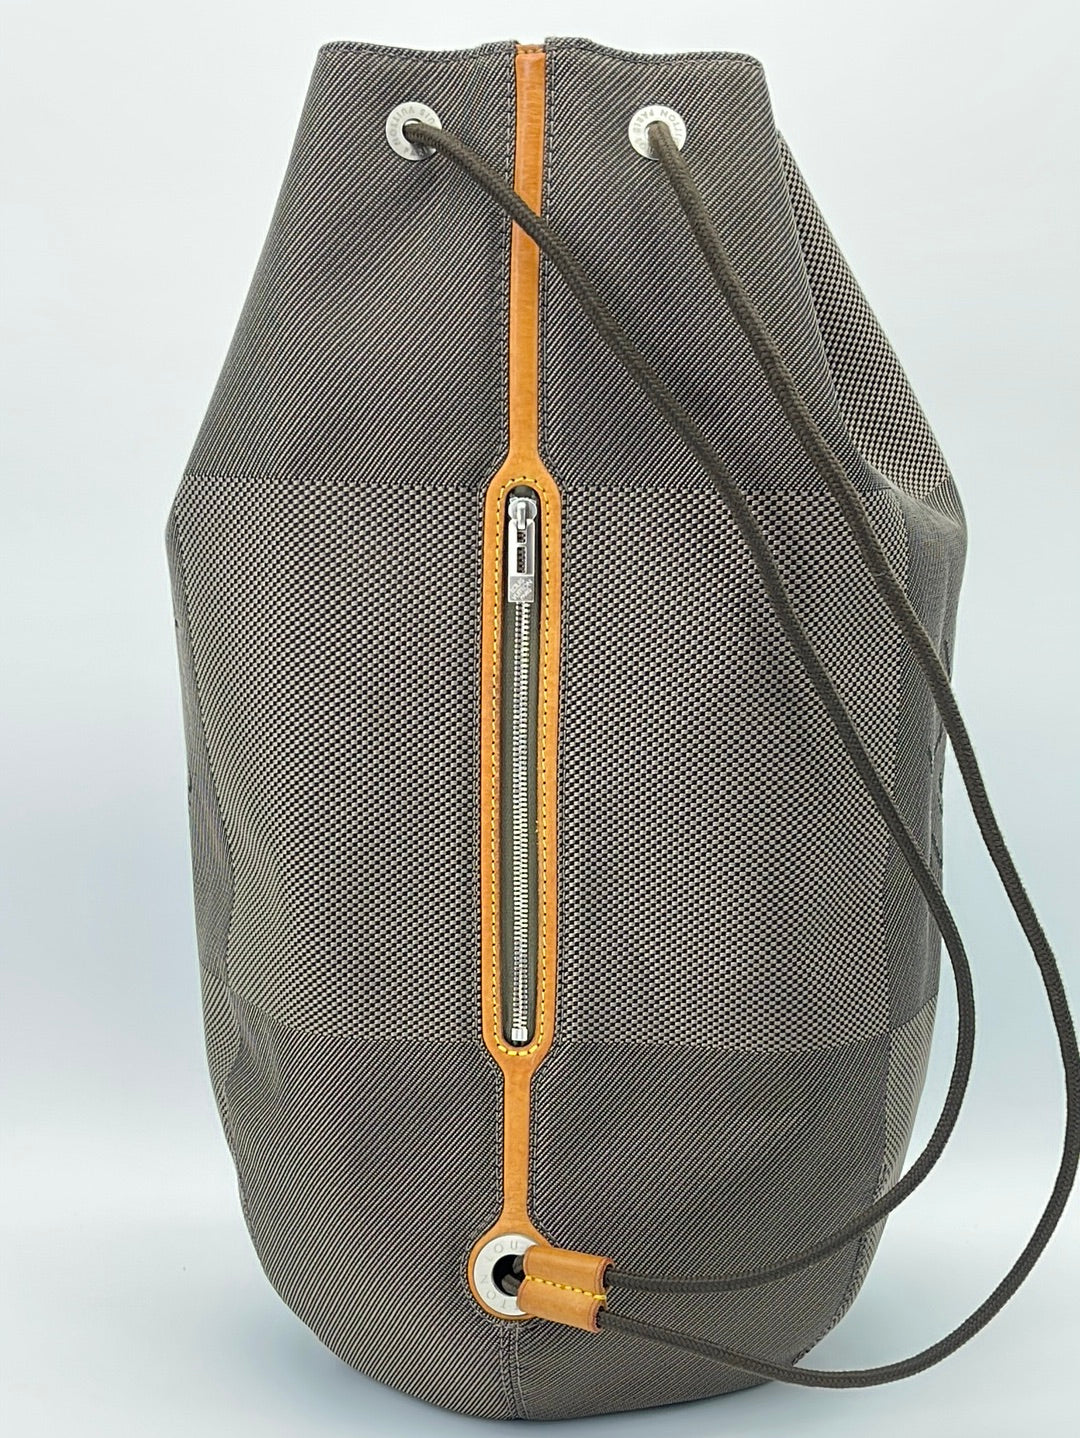 LV Dinosour Design Drawstring Bag for Sale by emilytstuff